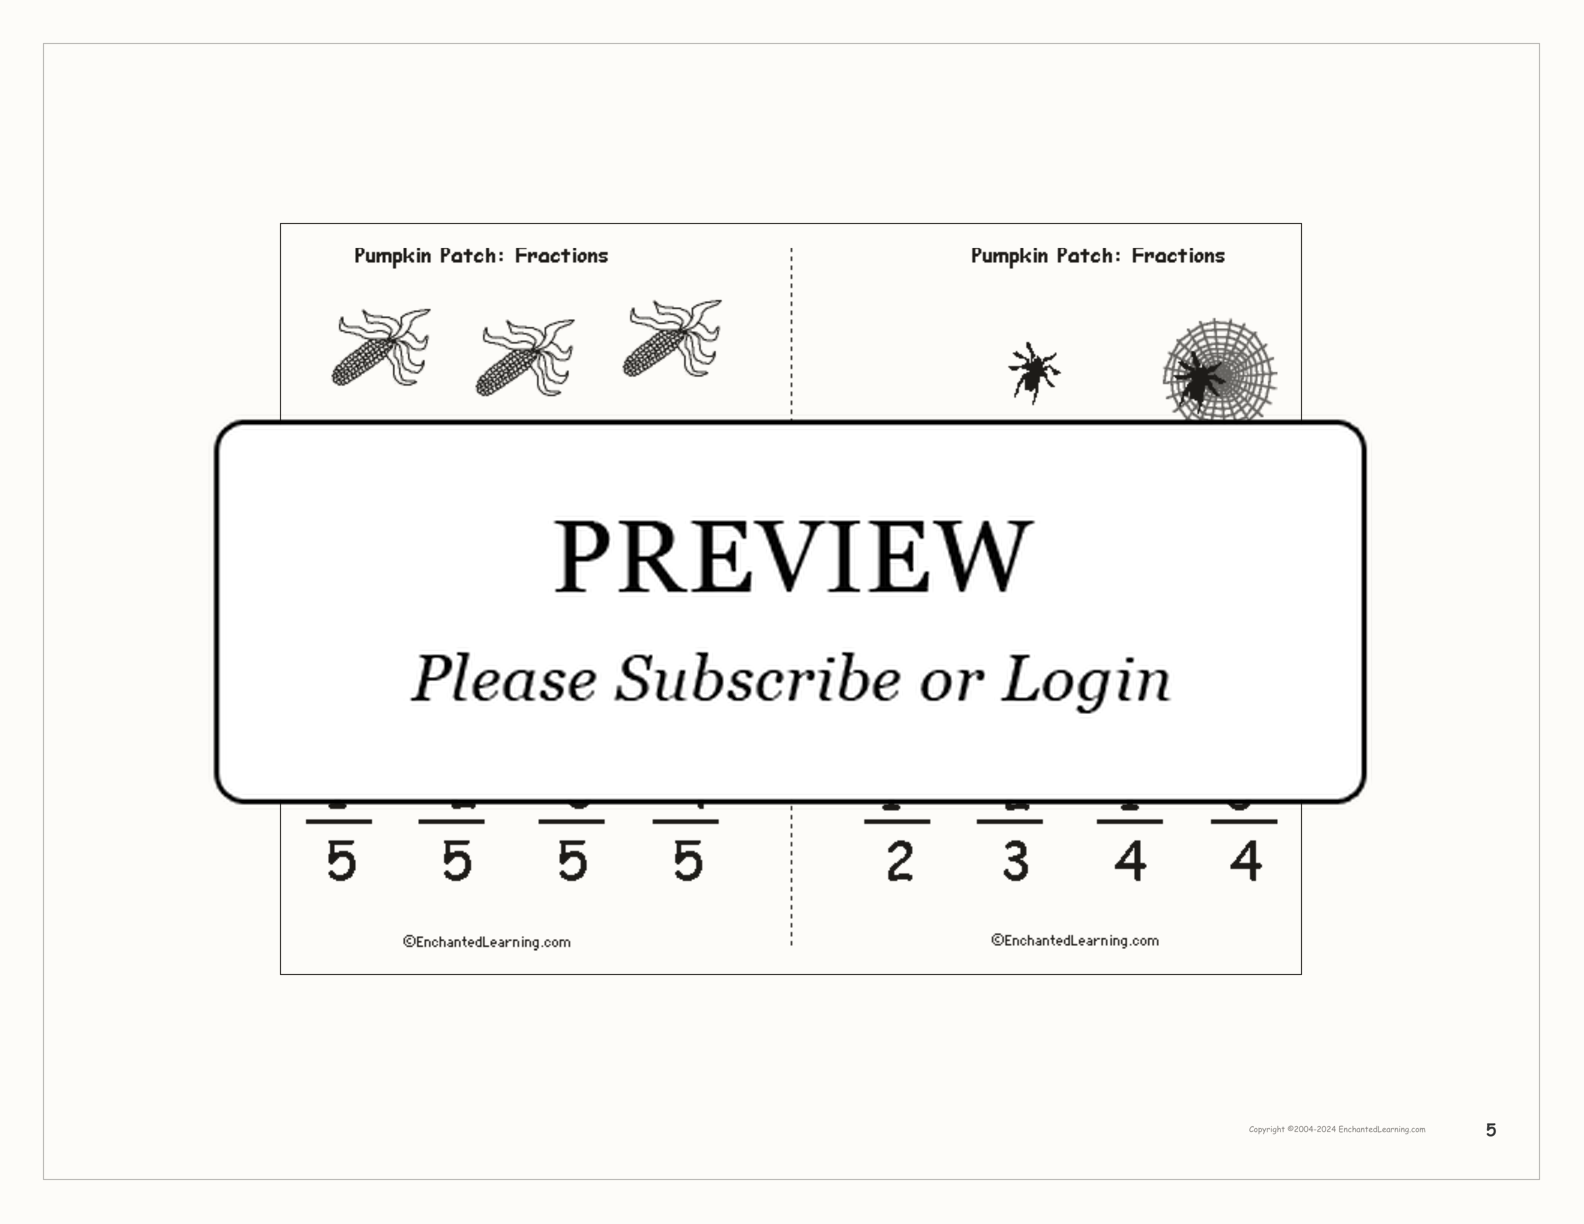 Pumpkin Patch: Fractions Book interactive printout page 5